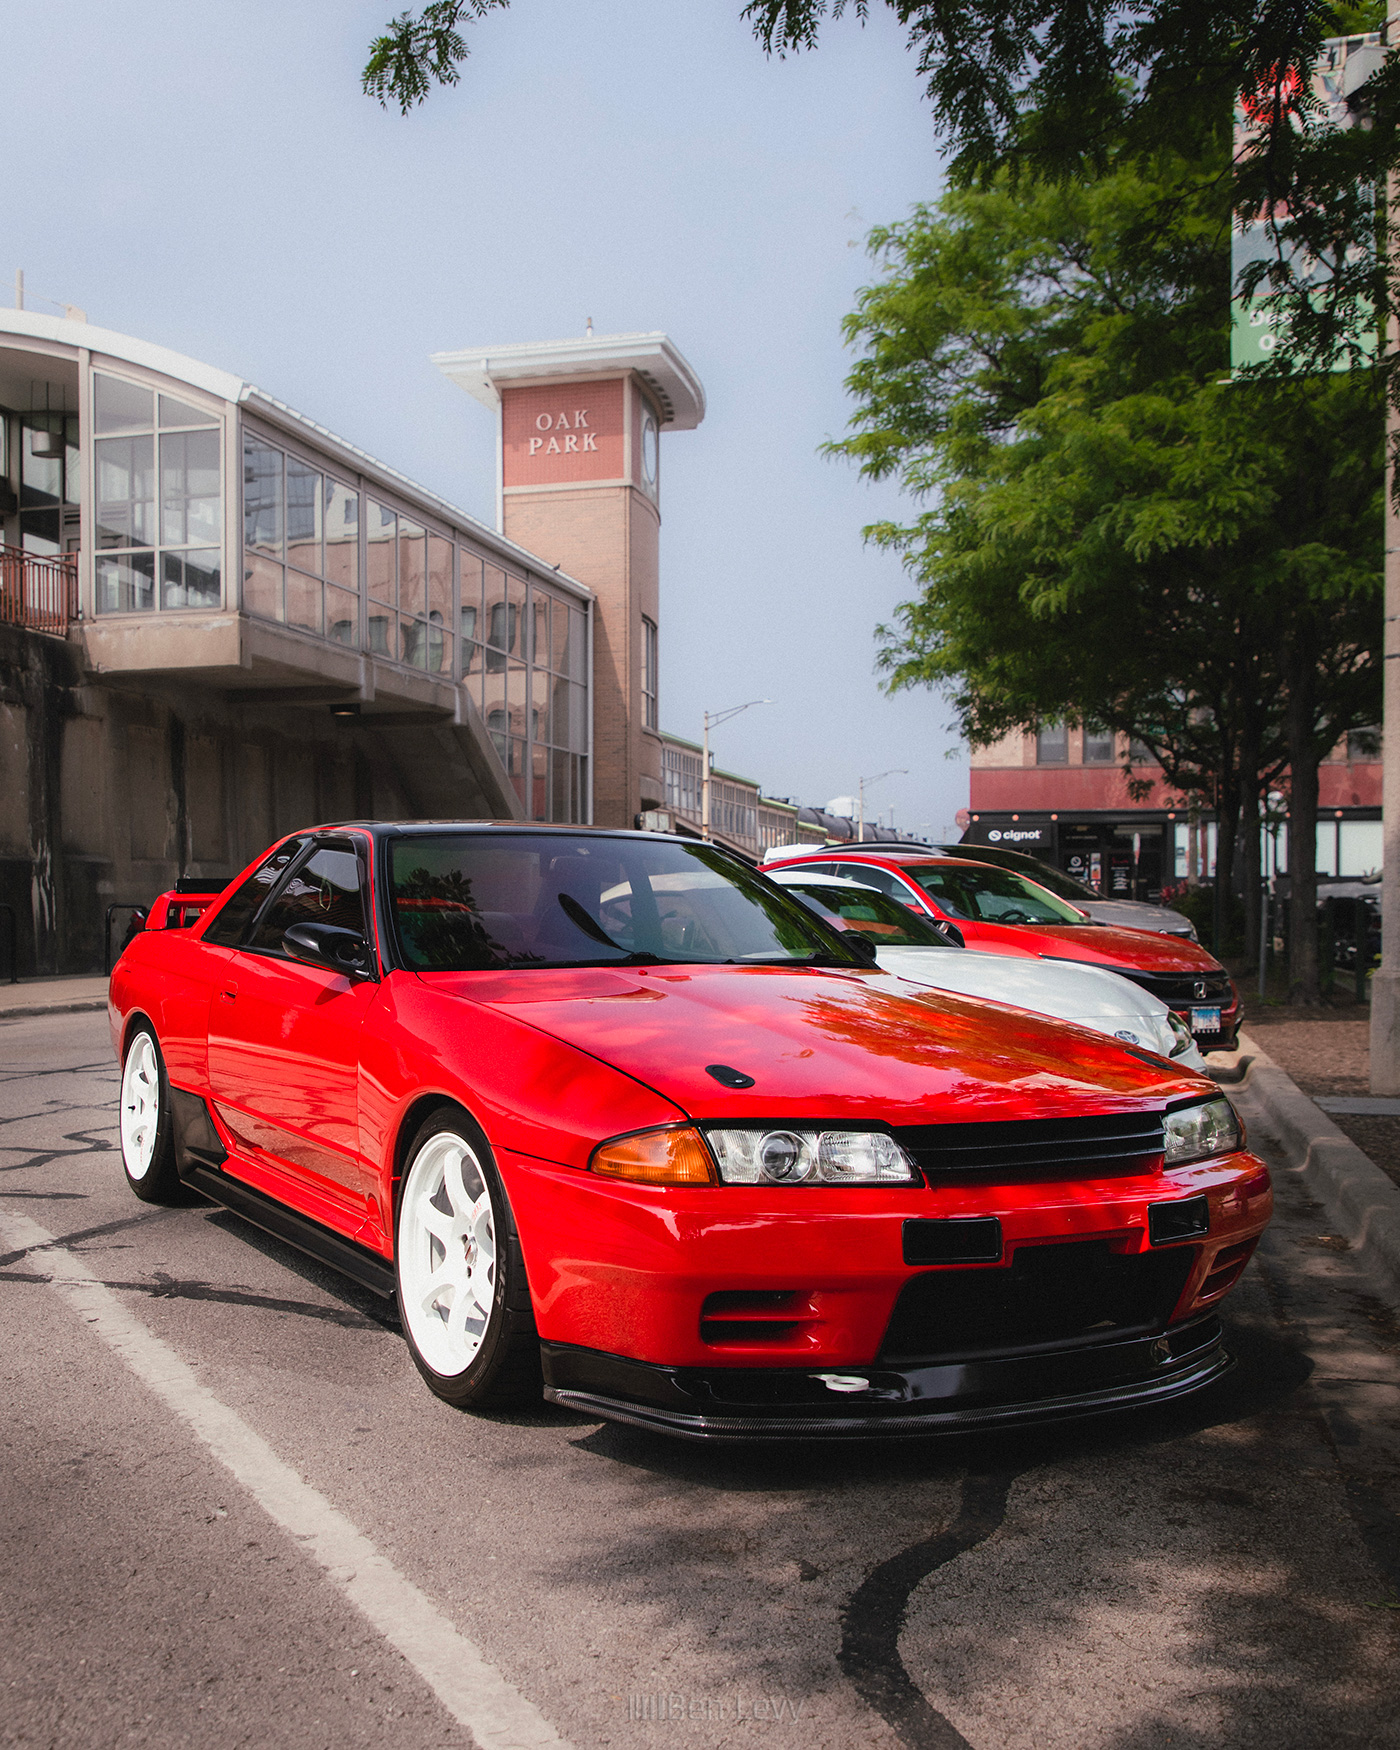 Red Skyline GT-R Parked in Oak Park